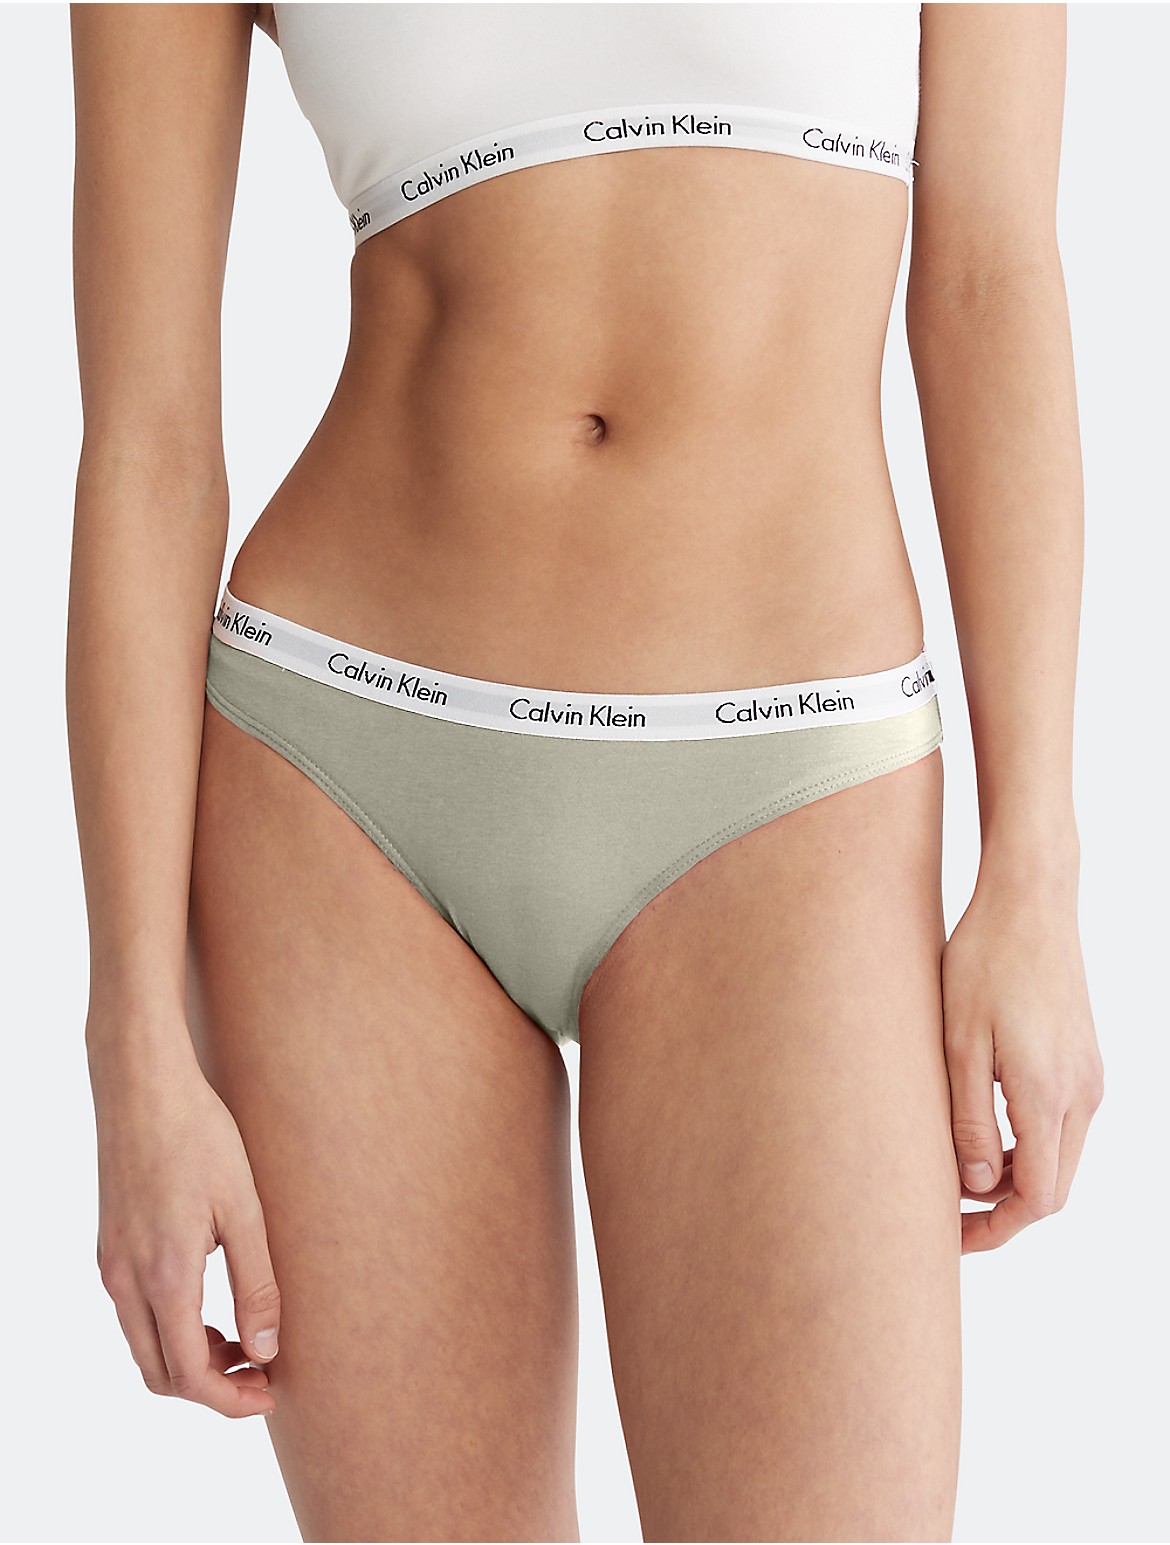 Calvin Klein Women's Carousel Logo Cotton Bikini - Grey - XS